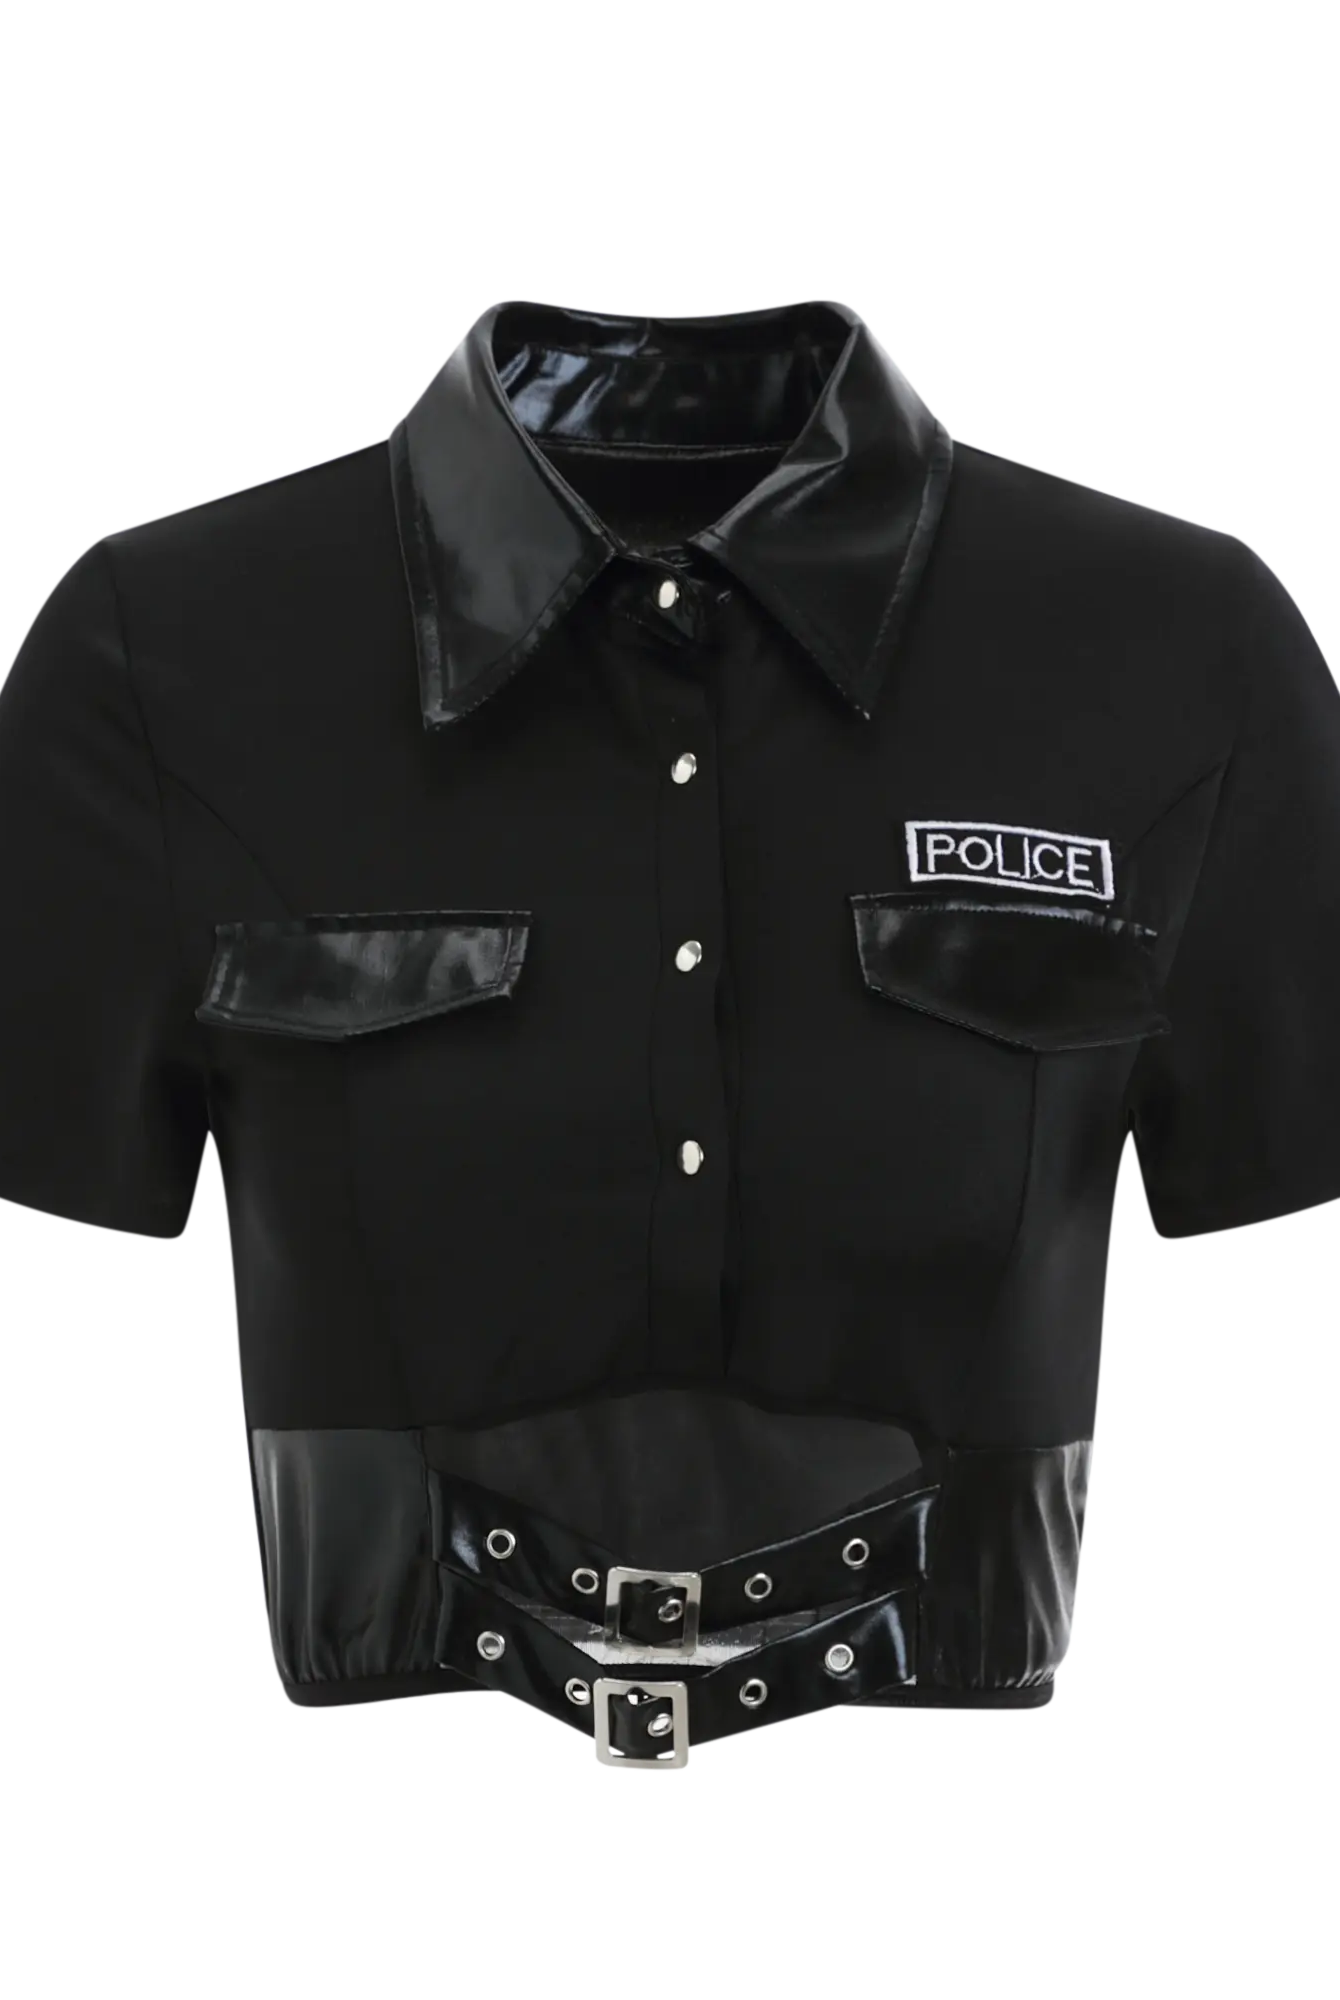 Seductive Deep V Bodycon Mini Skirt Police Uniform Lingerie Set Peach Passion